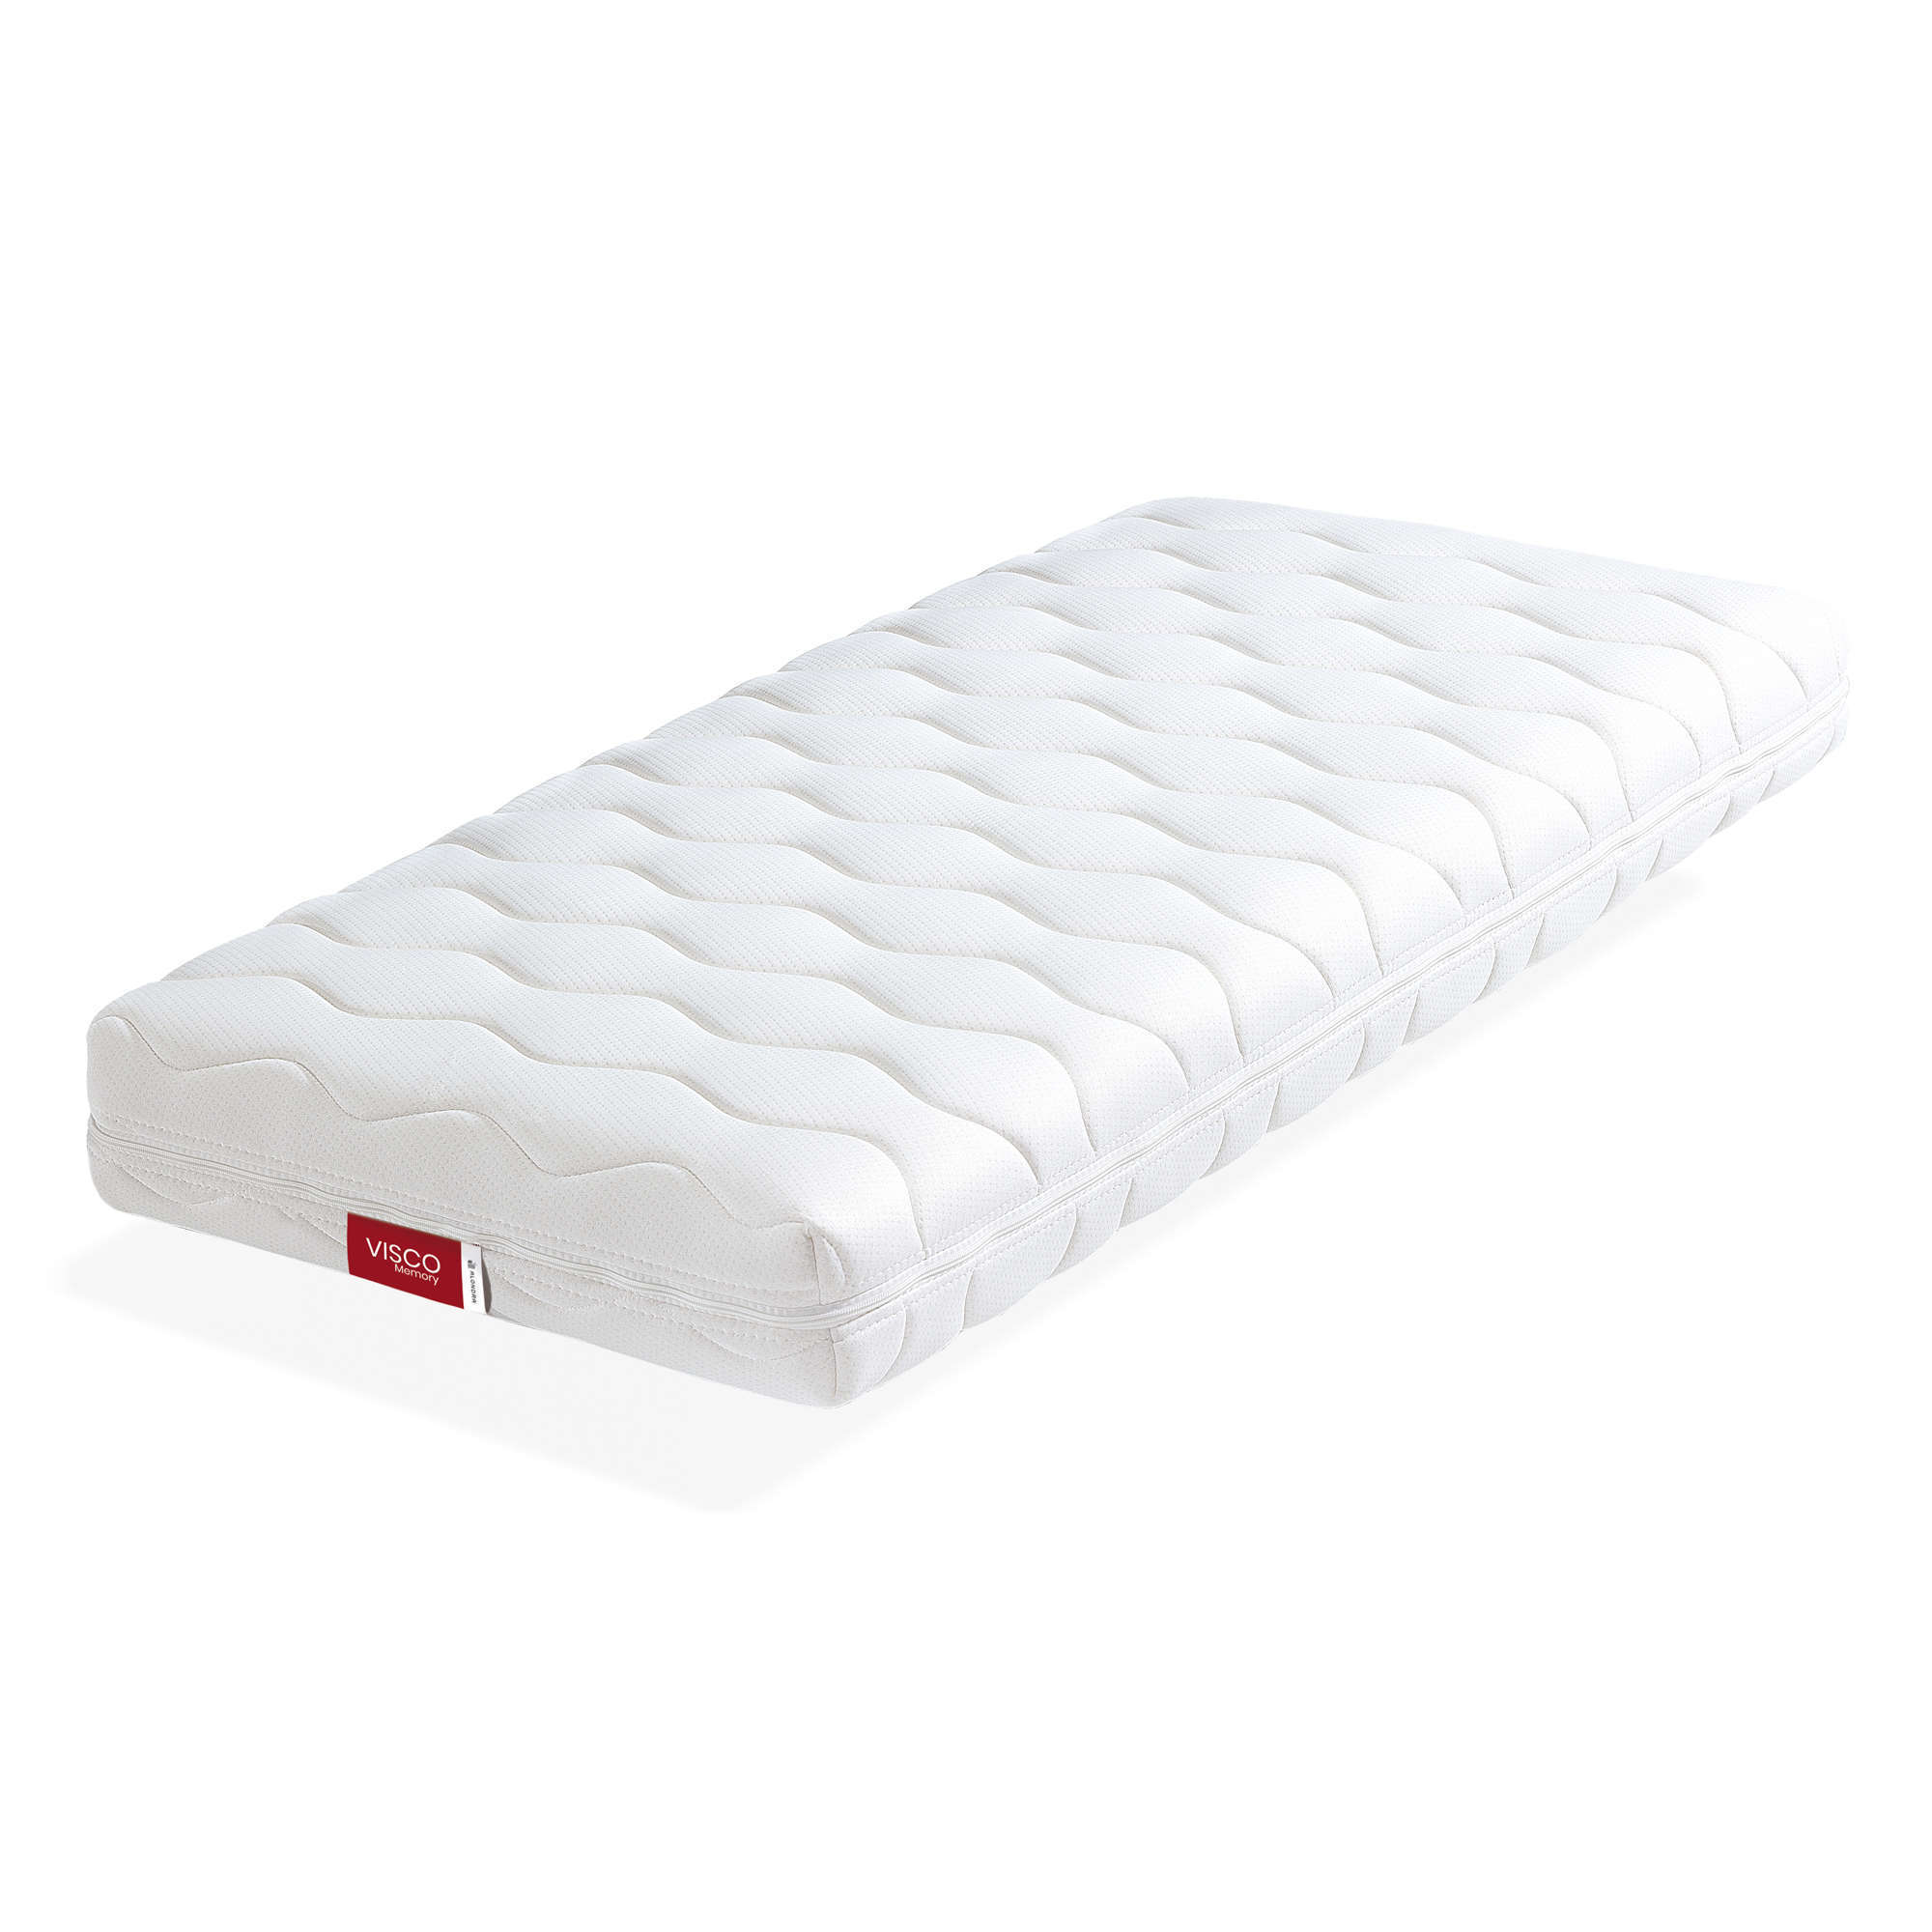 Memory foam an organic cot mattresses baby